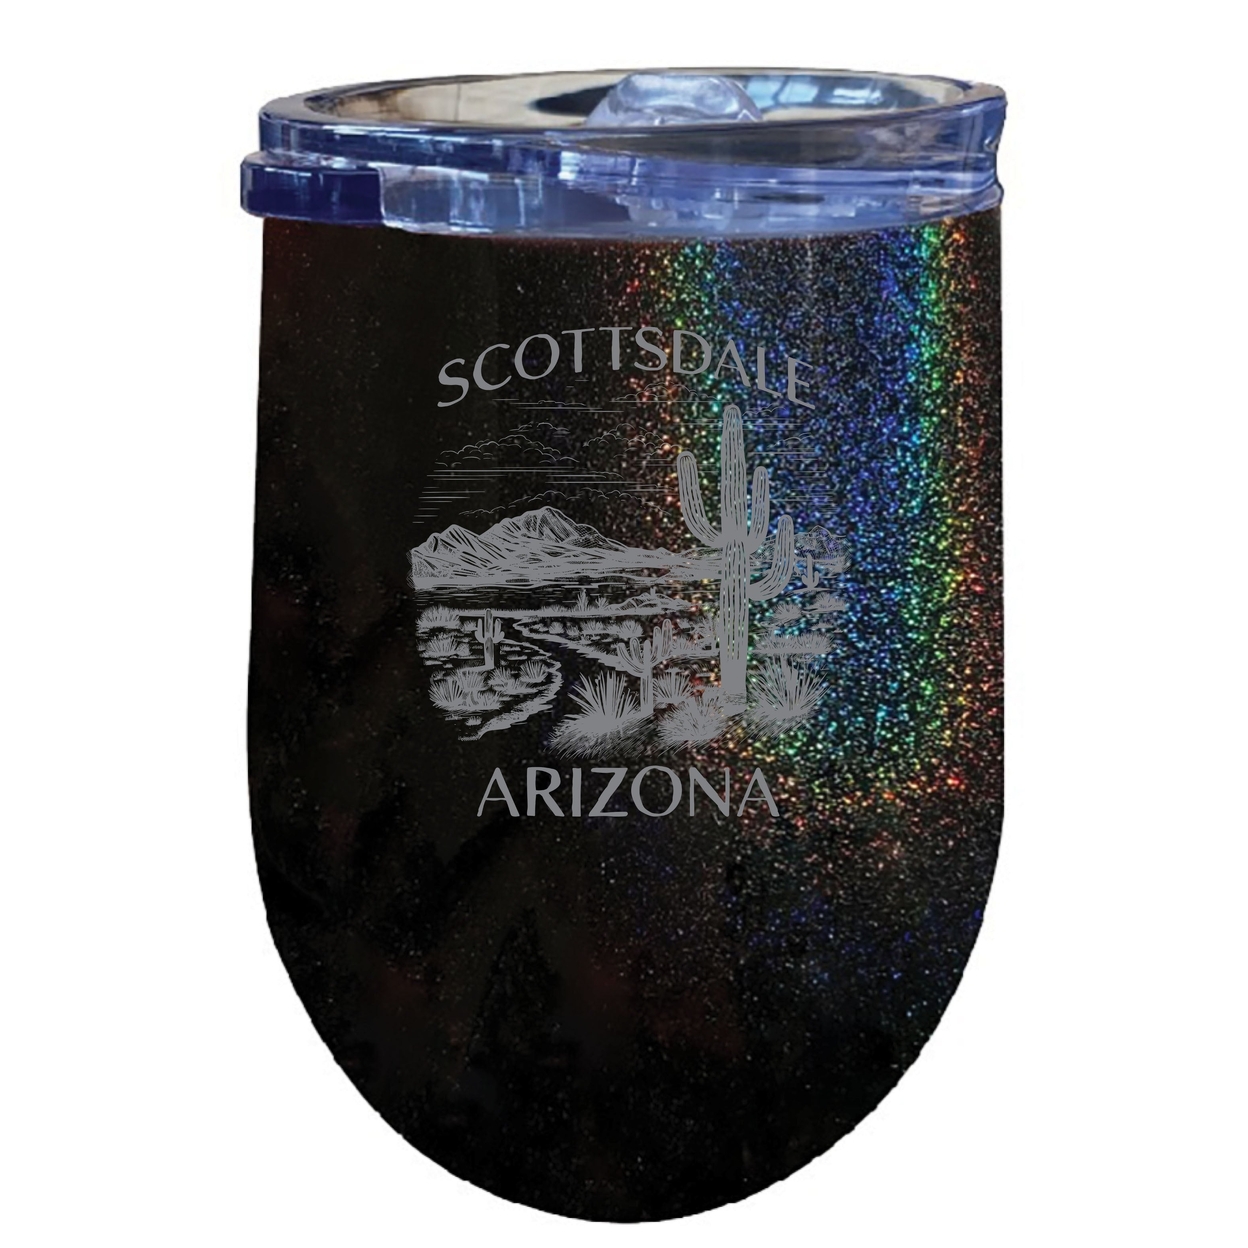 Scottsdale Arizona Souvenir 12 Oz Engraved Insulated Wine Stainless Steel Tumbler - Rainbow Glitter Gray,,4-Pack